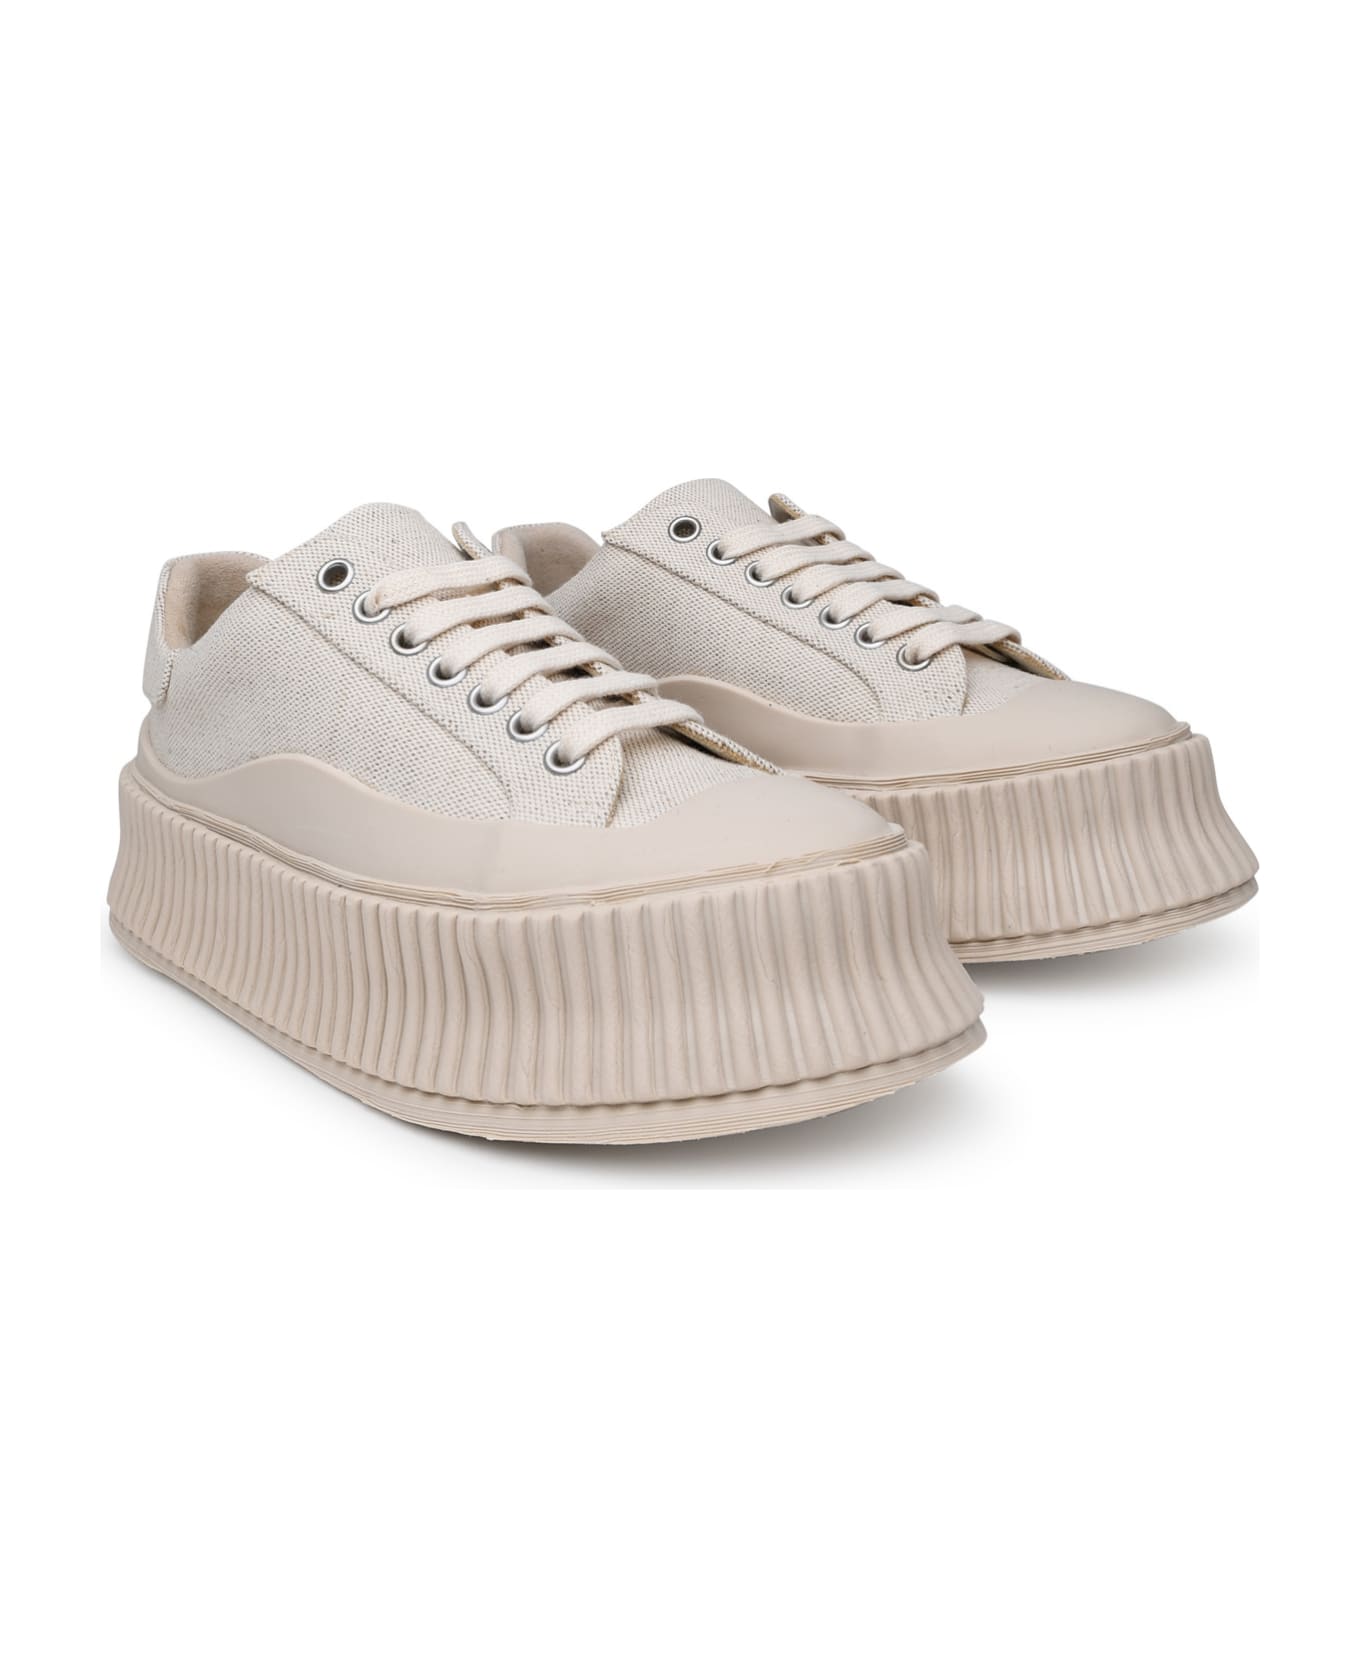 Jil Sander Ivory Canvas Sneakers - Cream